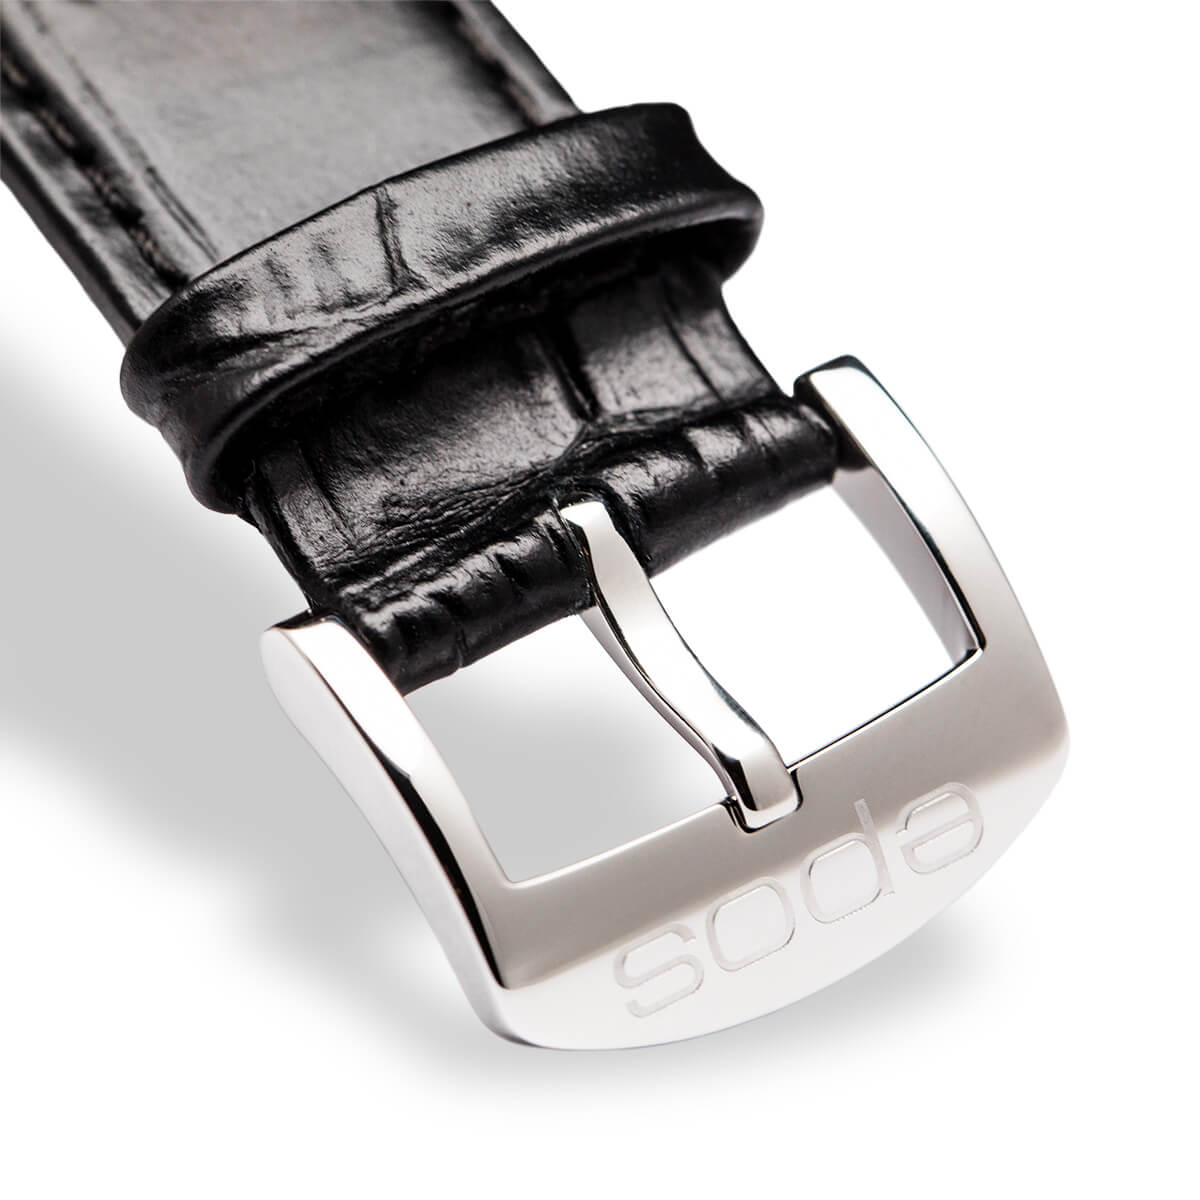 EPOS OEUVRE D'ART 3429 Limited Edition Hand-Wound Skeleton Pocket/Wrist Watch - Wilson Watches 